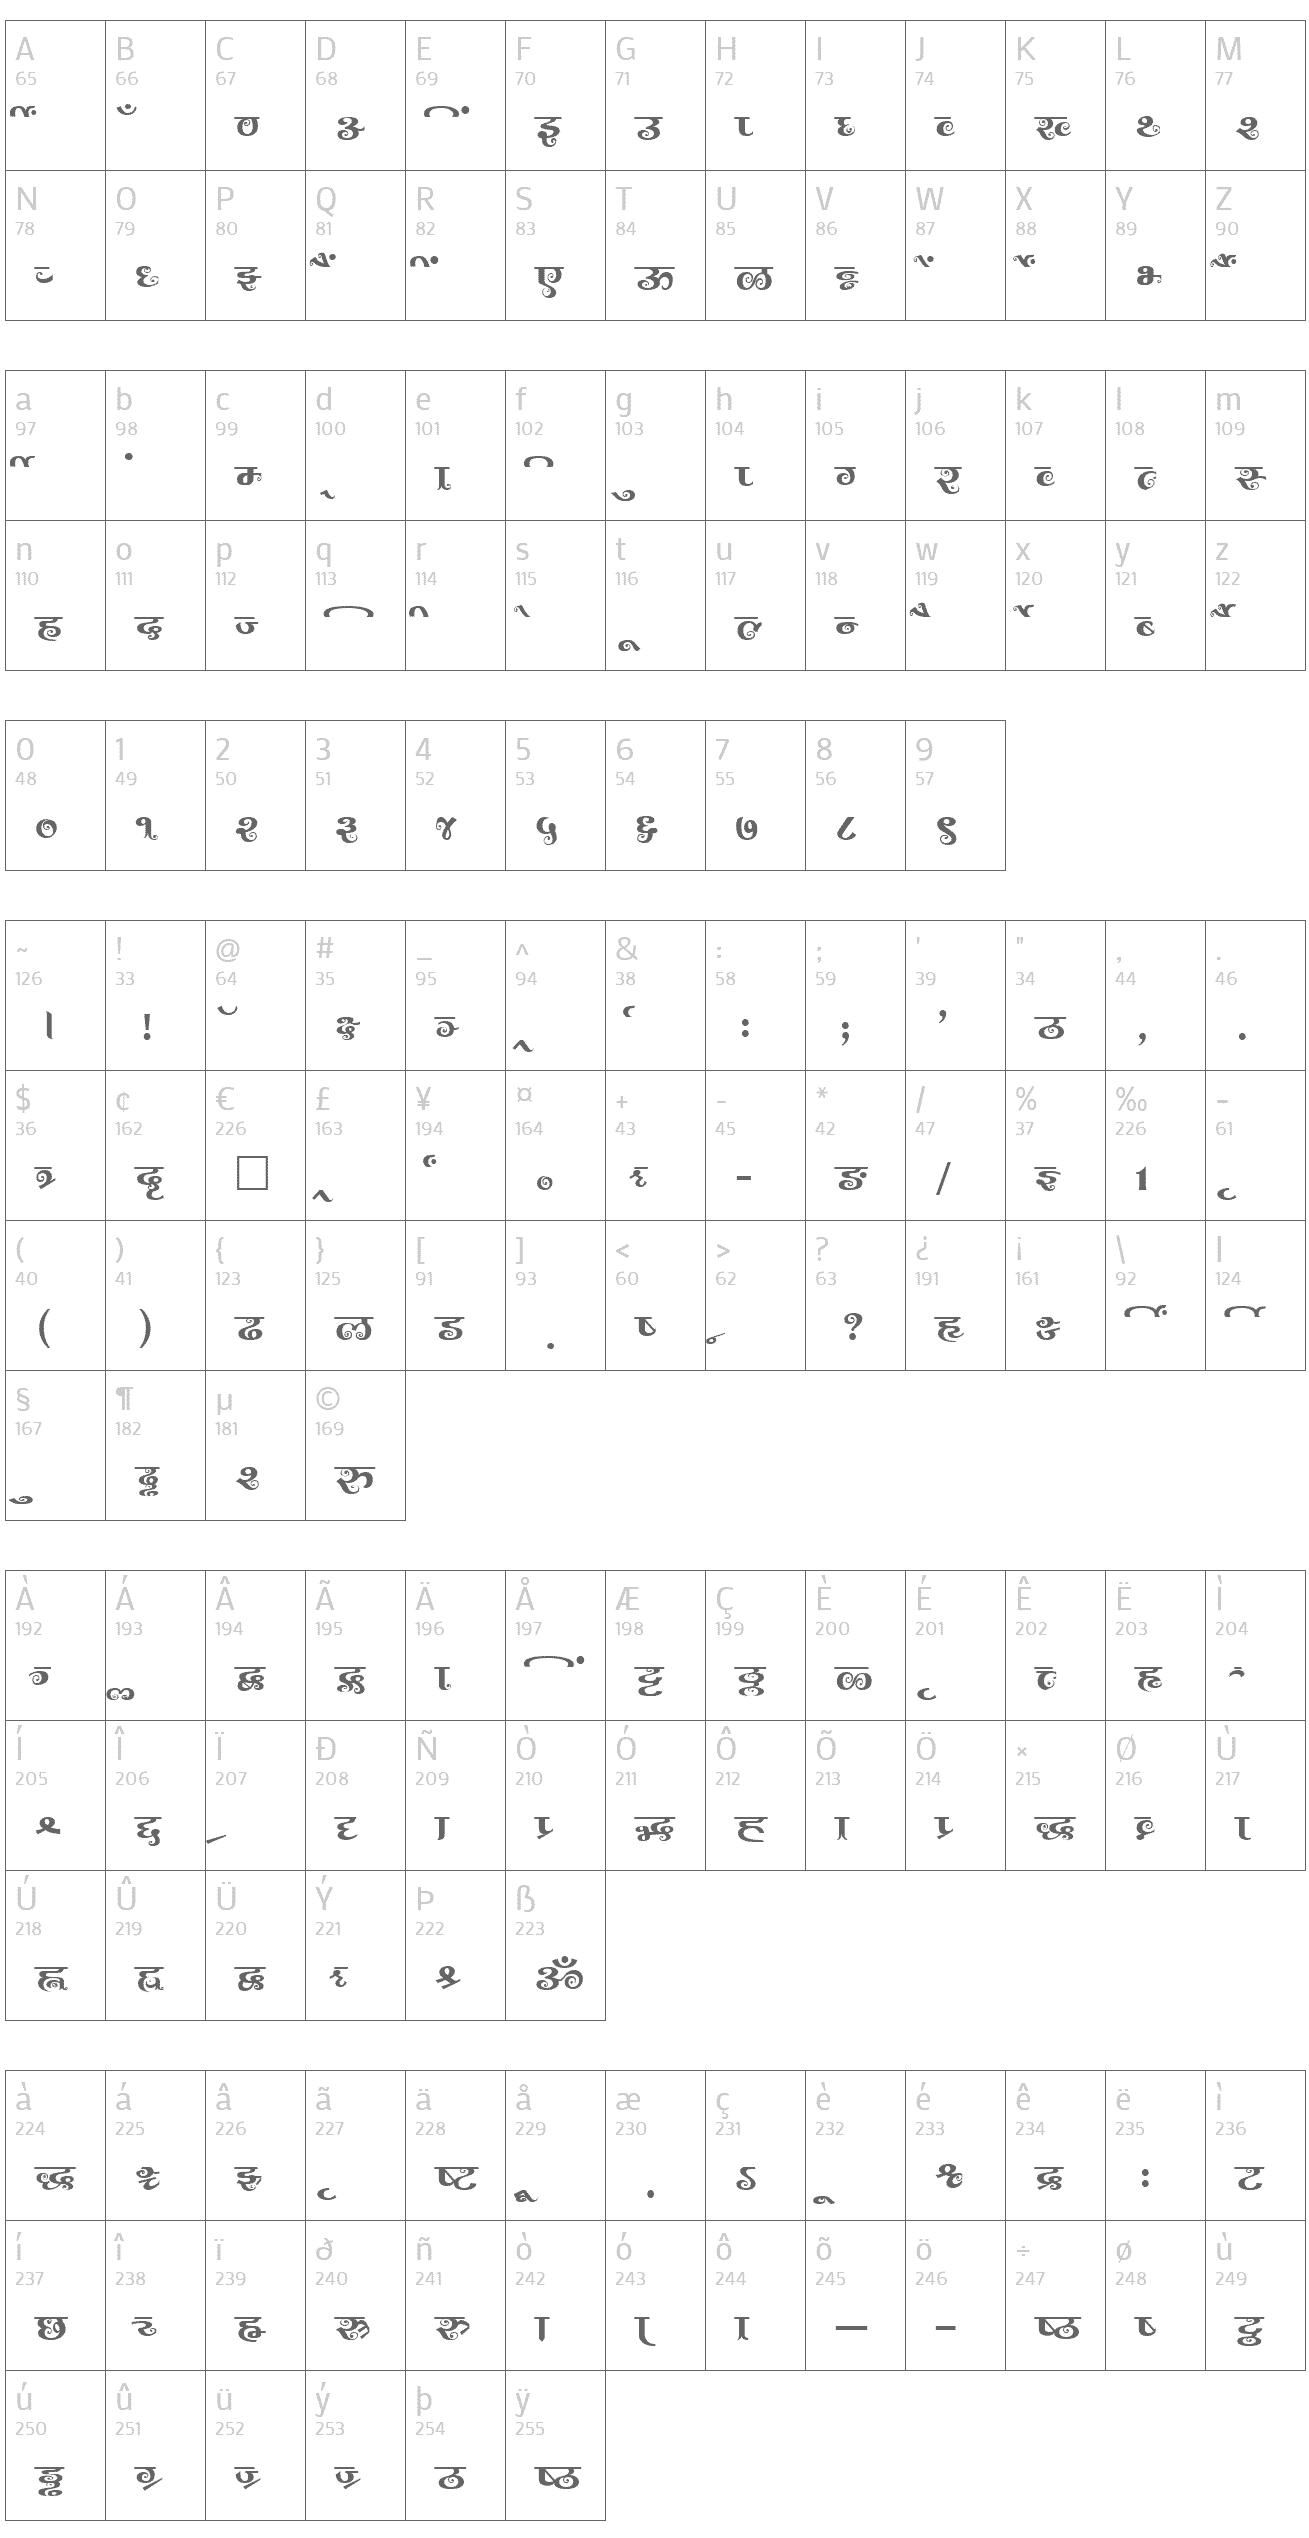 akruti font to unicode convertor